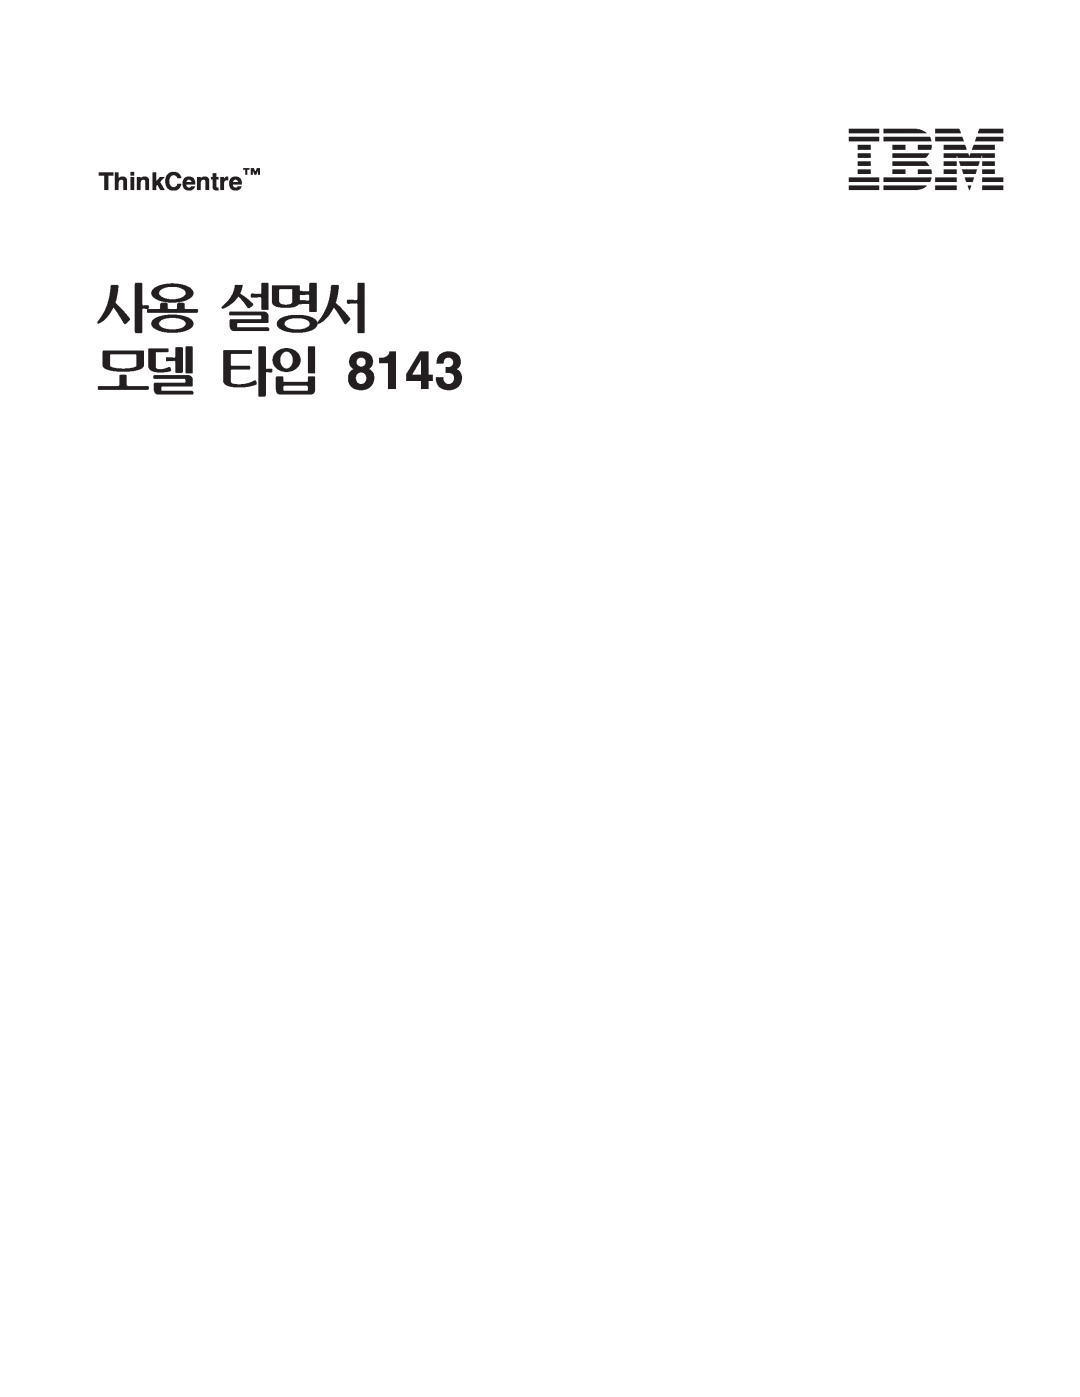 IBM 8143 manual ThinkCentre 